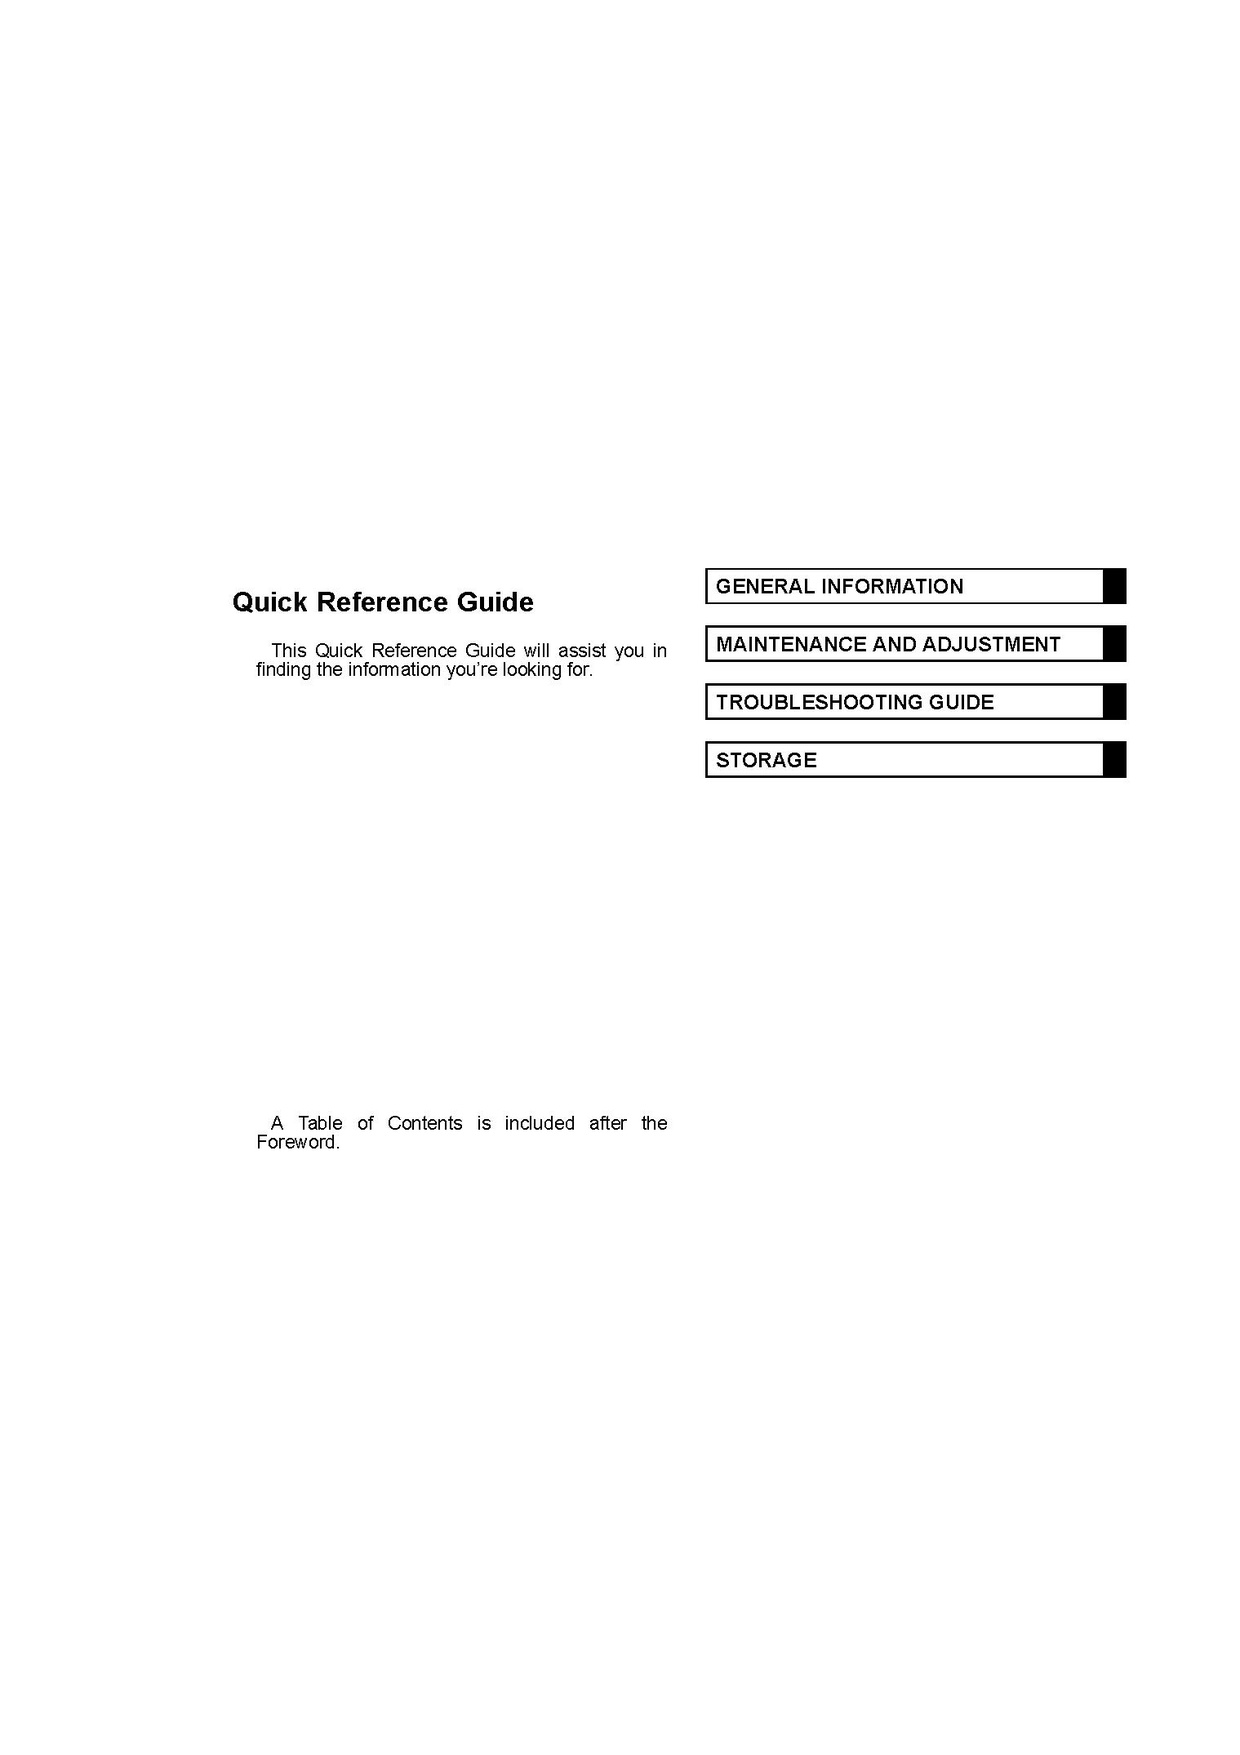 File:2015 Kawasaki KLX140L owners manual.pdf